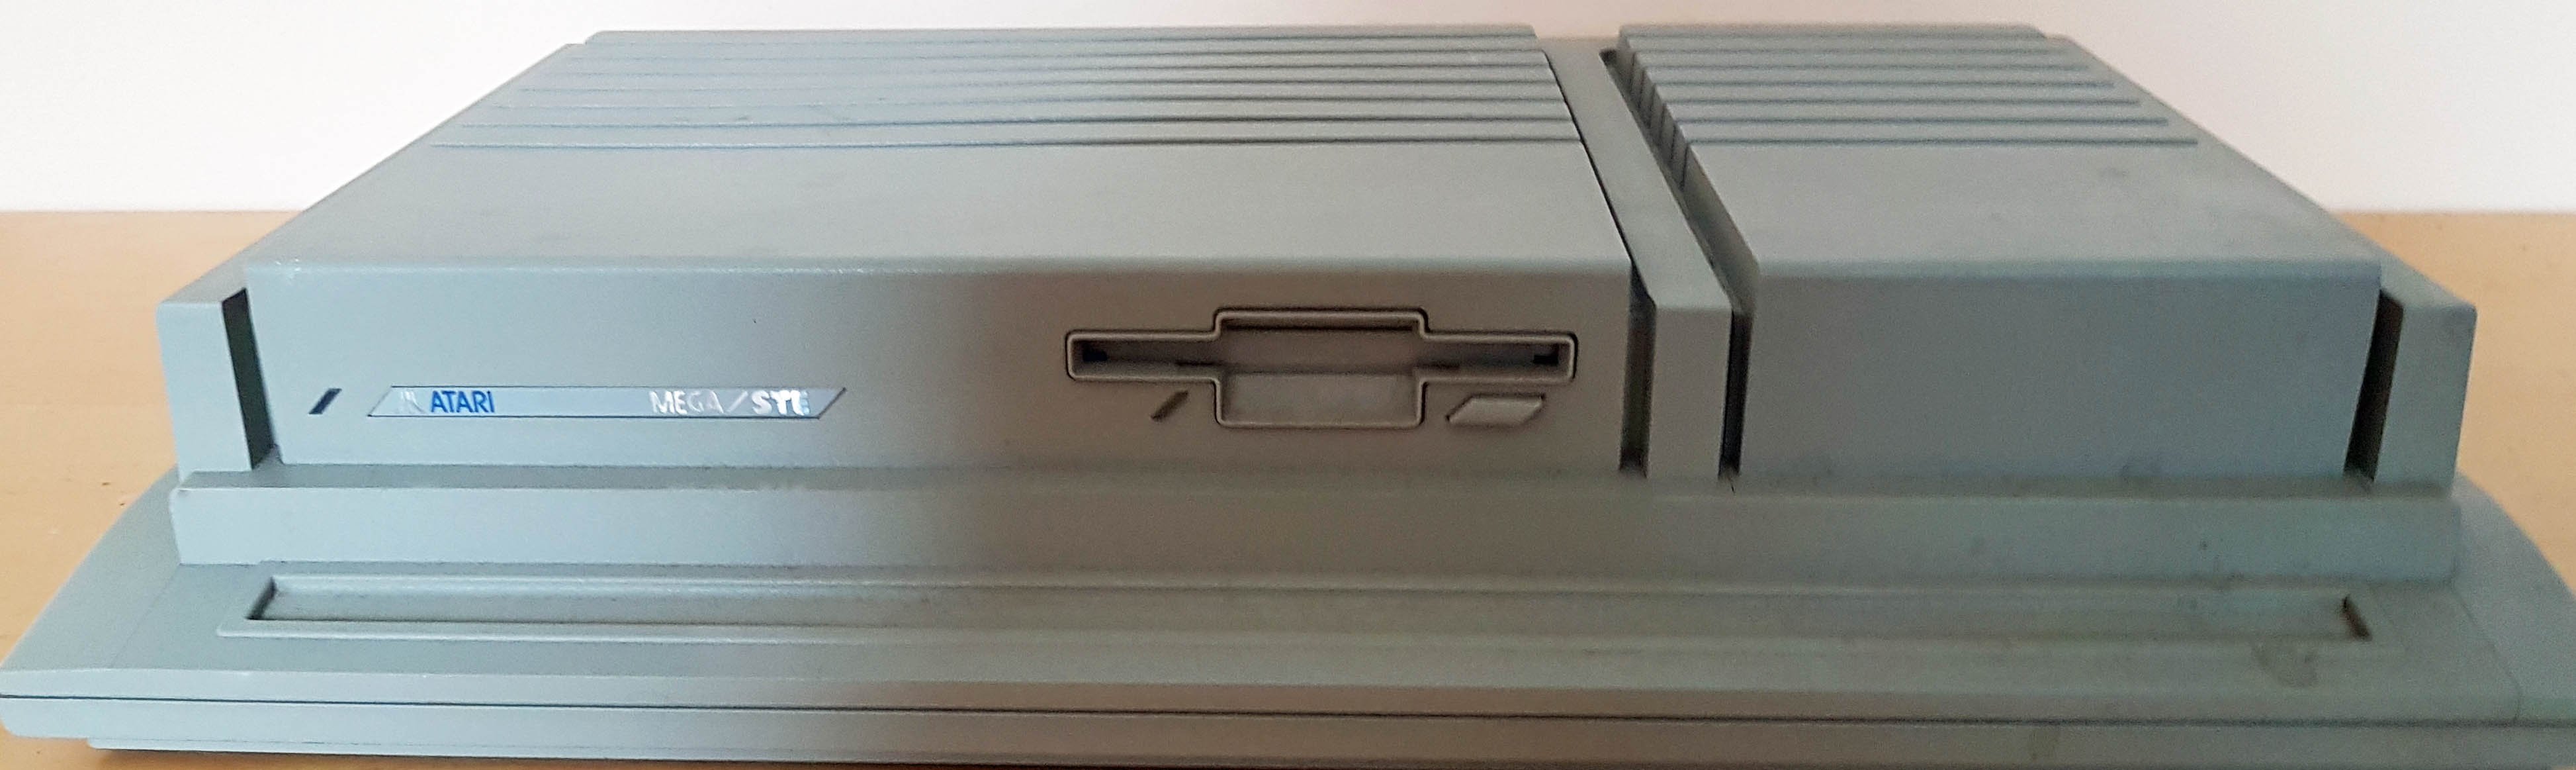 Atari Mega STE (museum comp:ex CC BY-NC-SA)